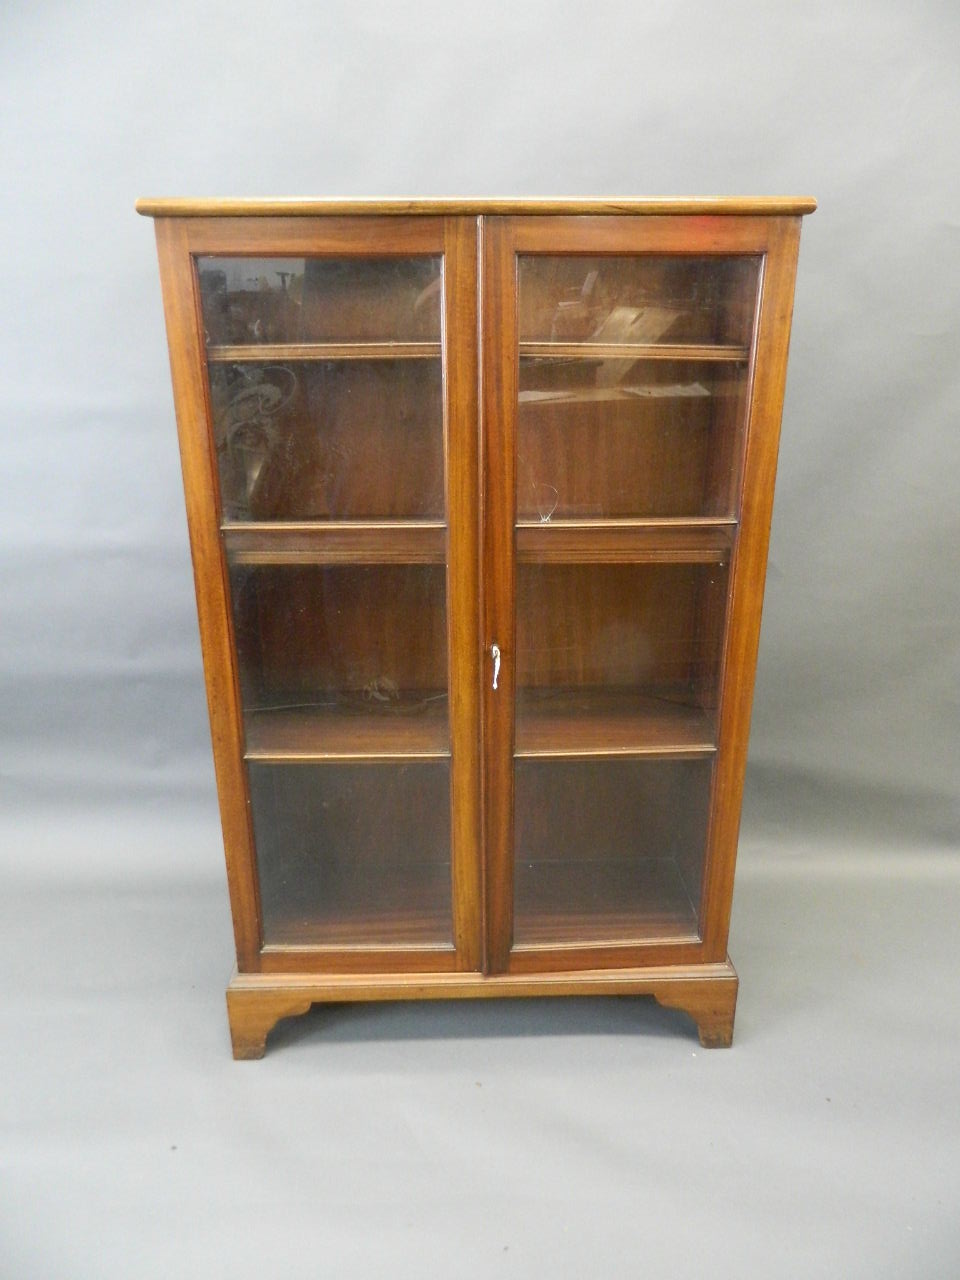 An Edwardian mahogany two door glazed bookcase raised on bracket supports, 30" x 11" x 48" (AF one